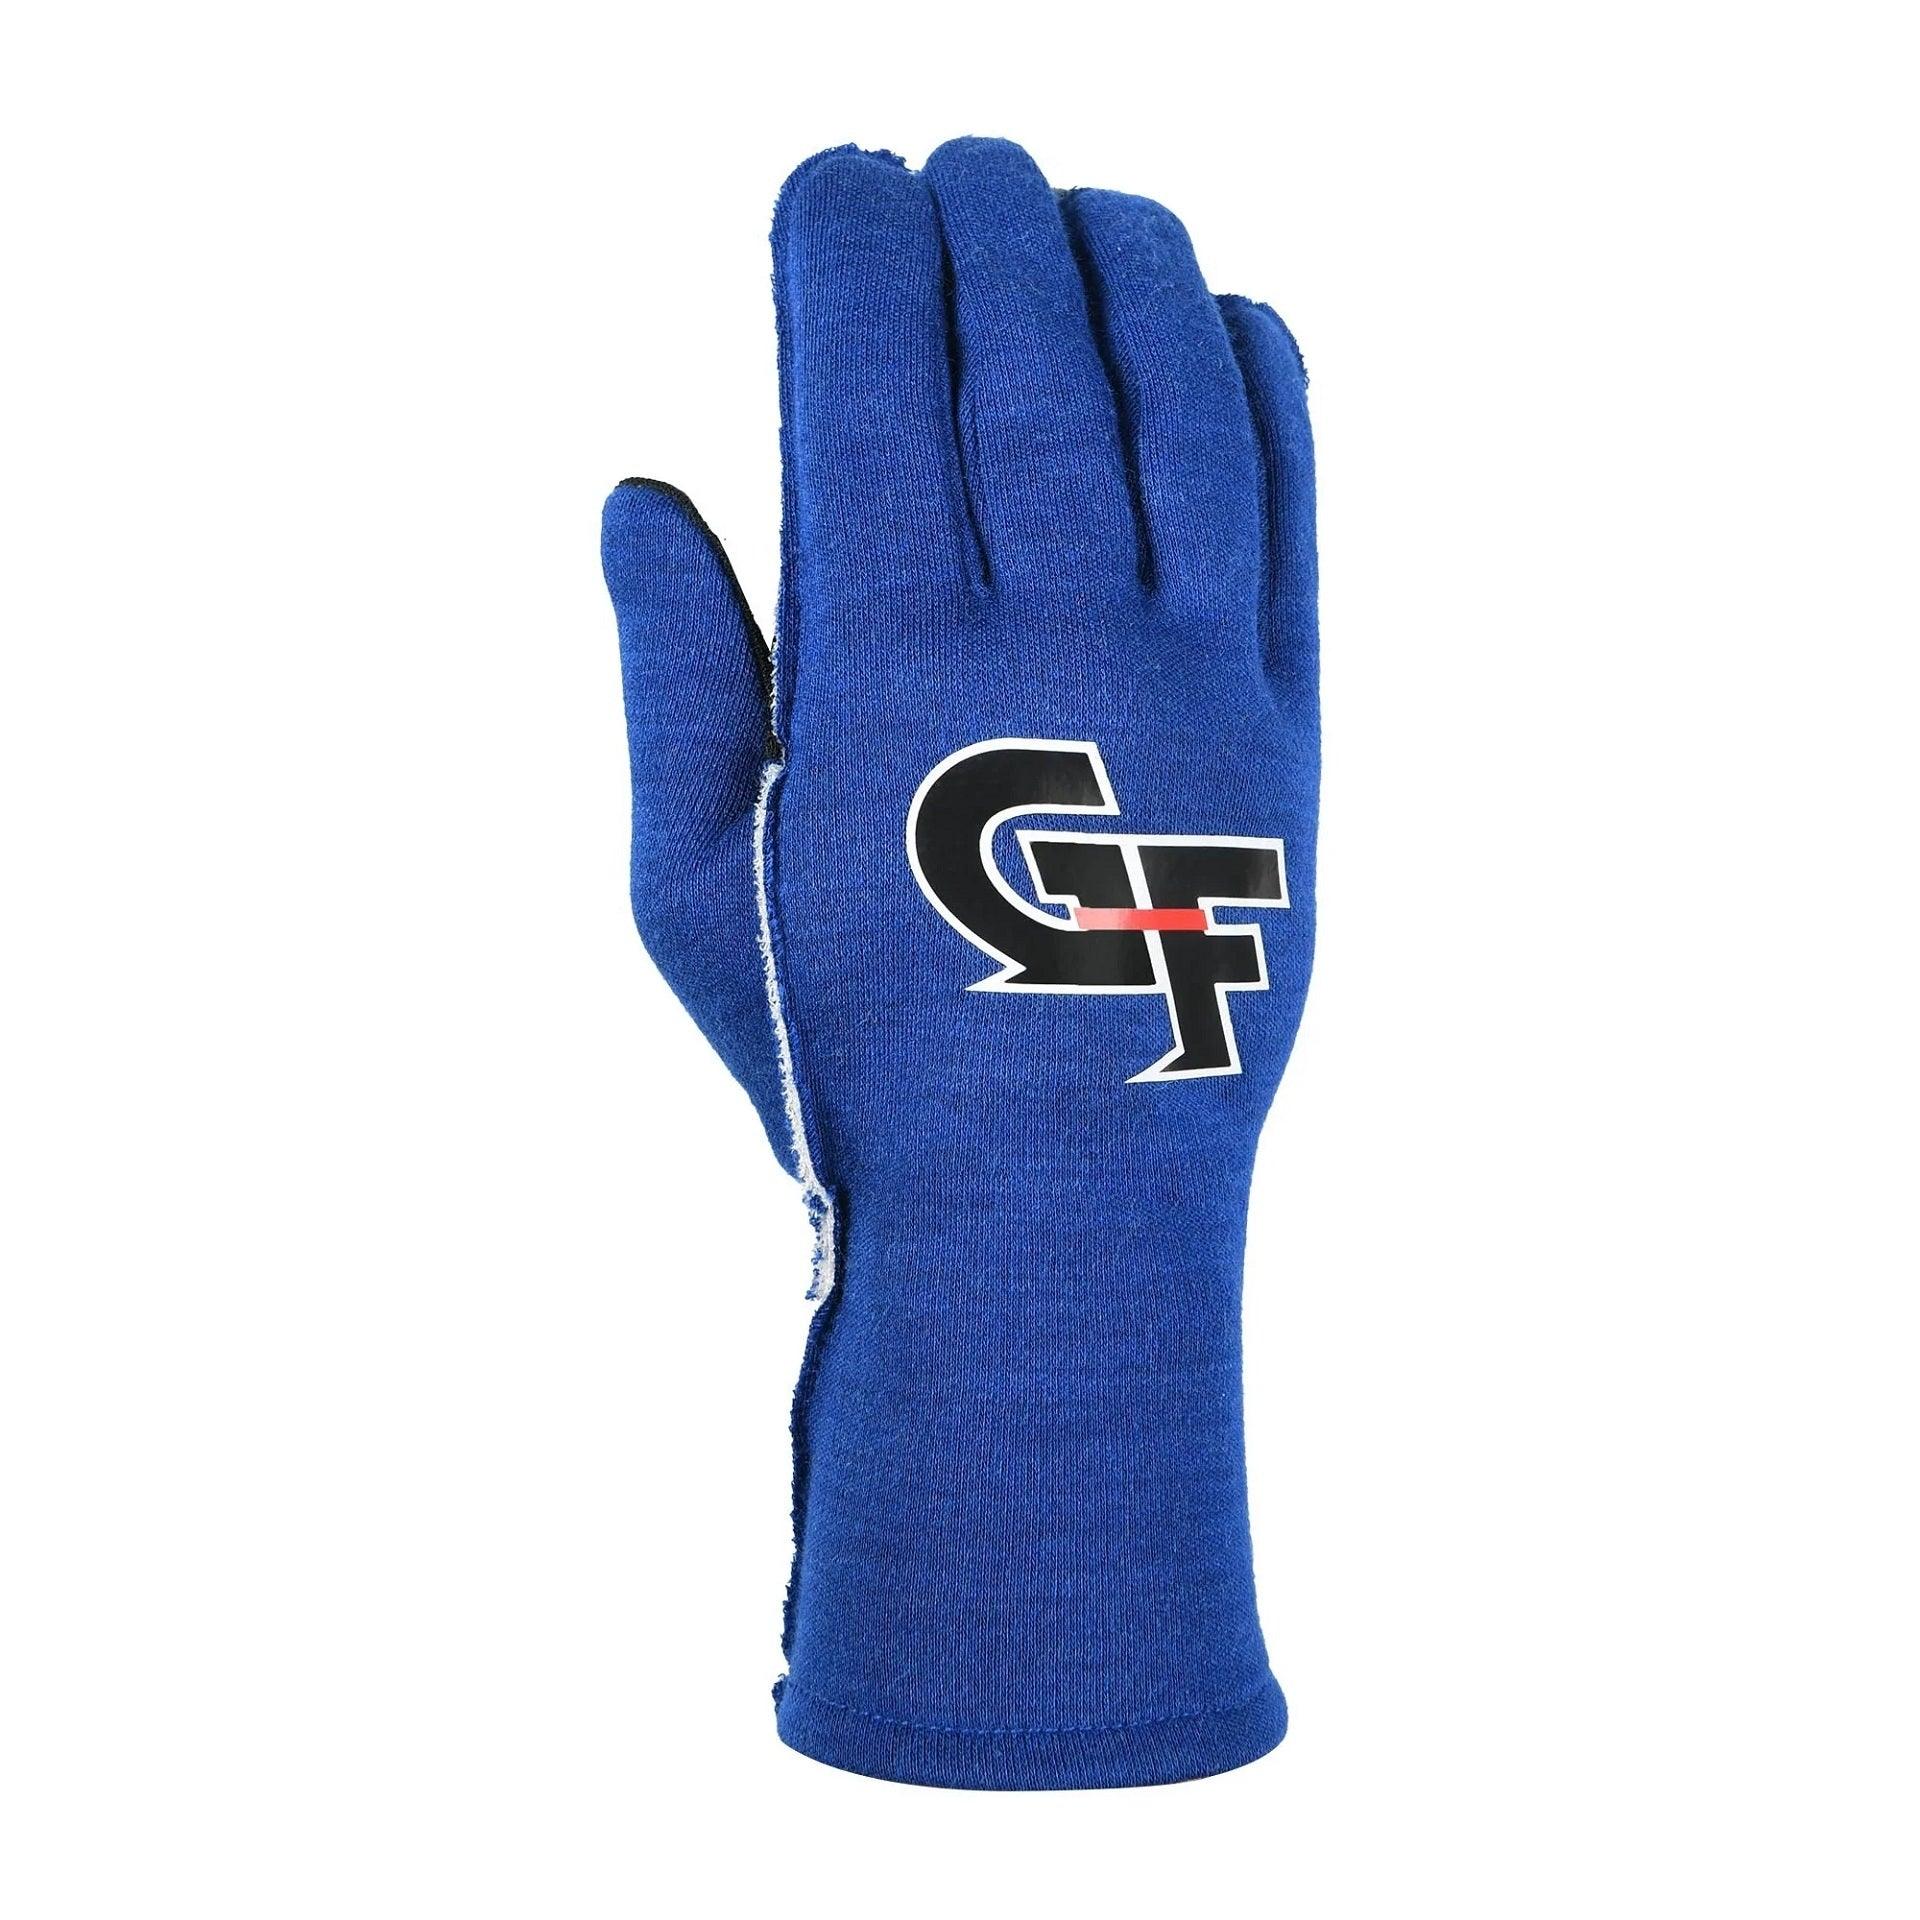 Gloves G-Limit X-Large Blue - Burlile Performance Products